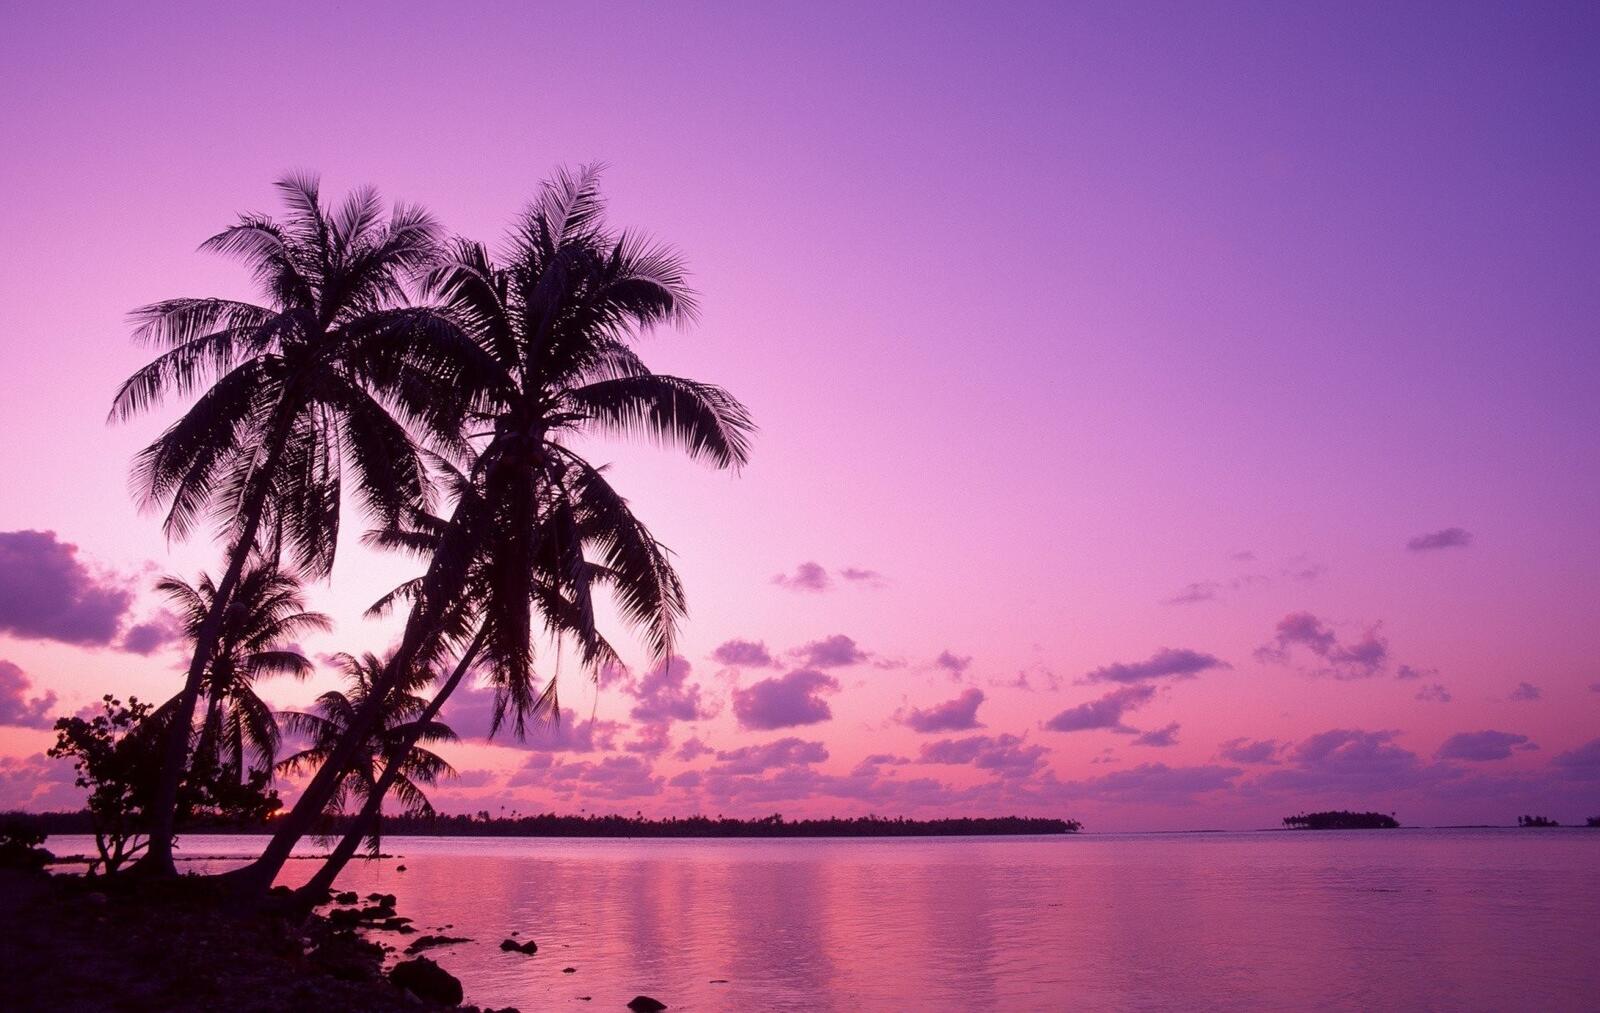 Бесплатное фото Пальмы на фоне заката.